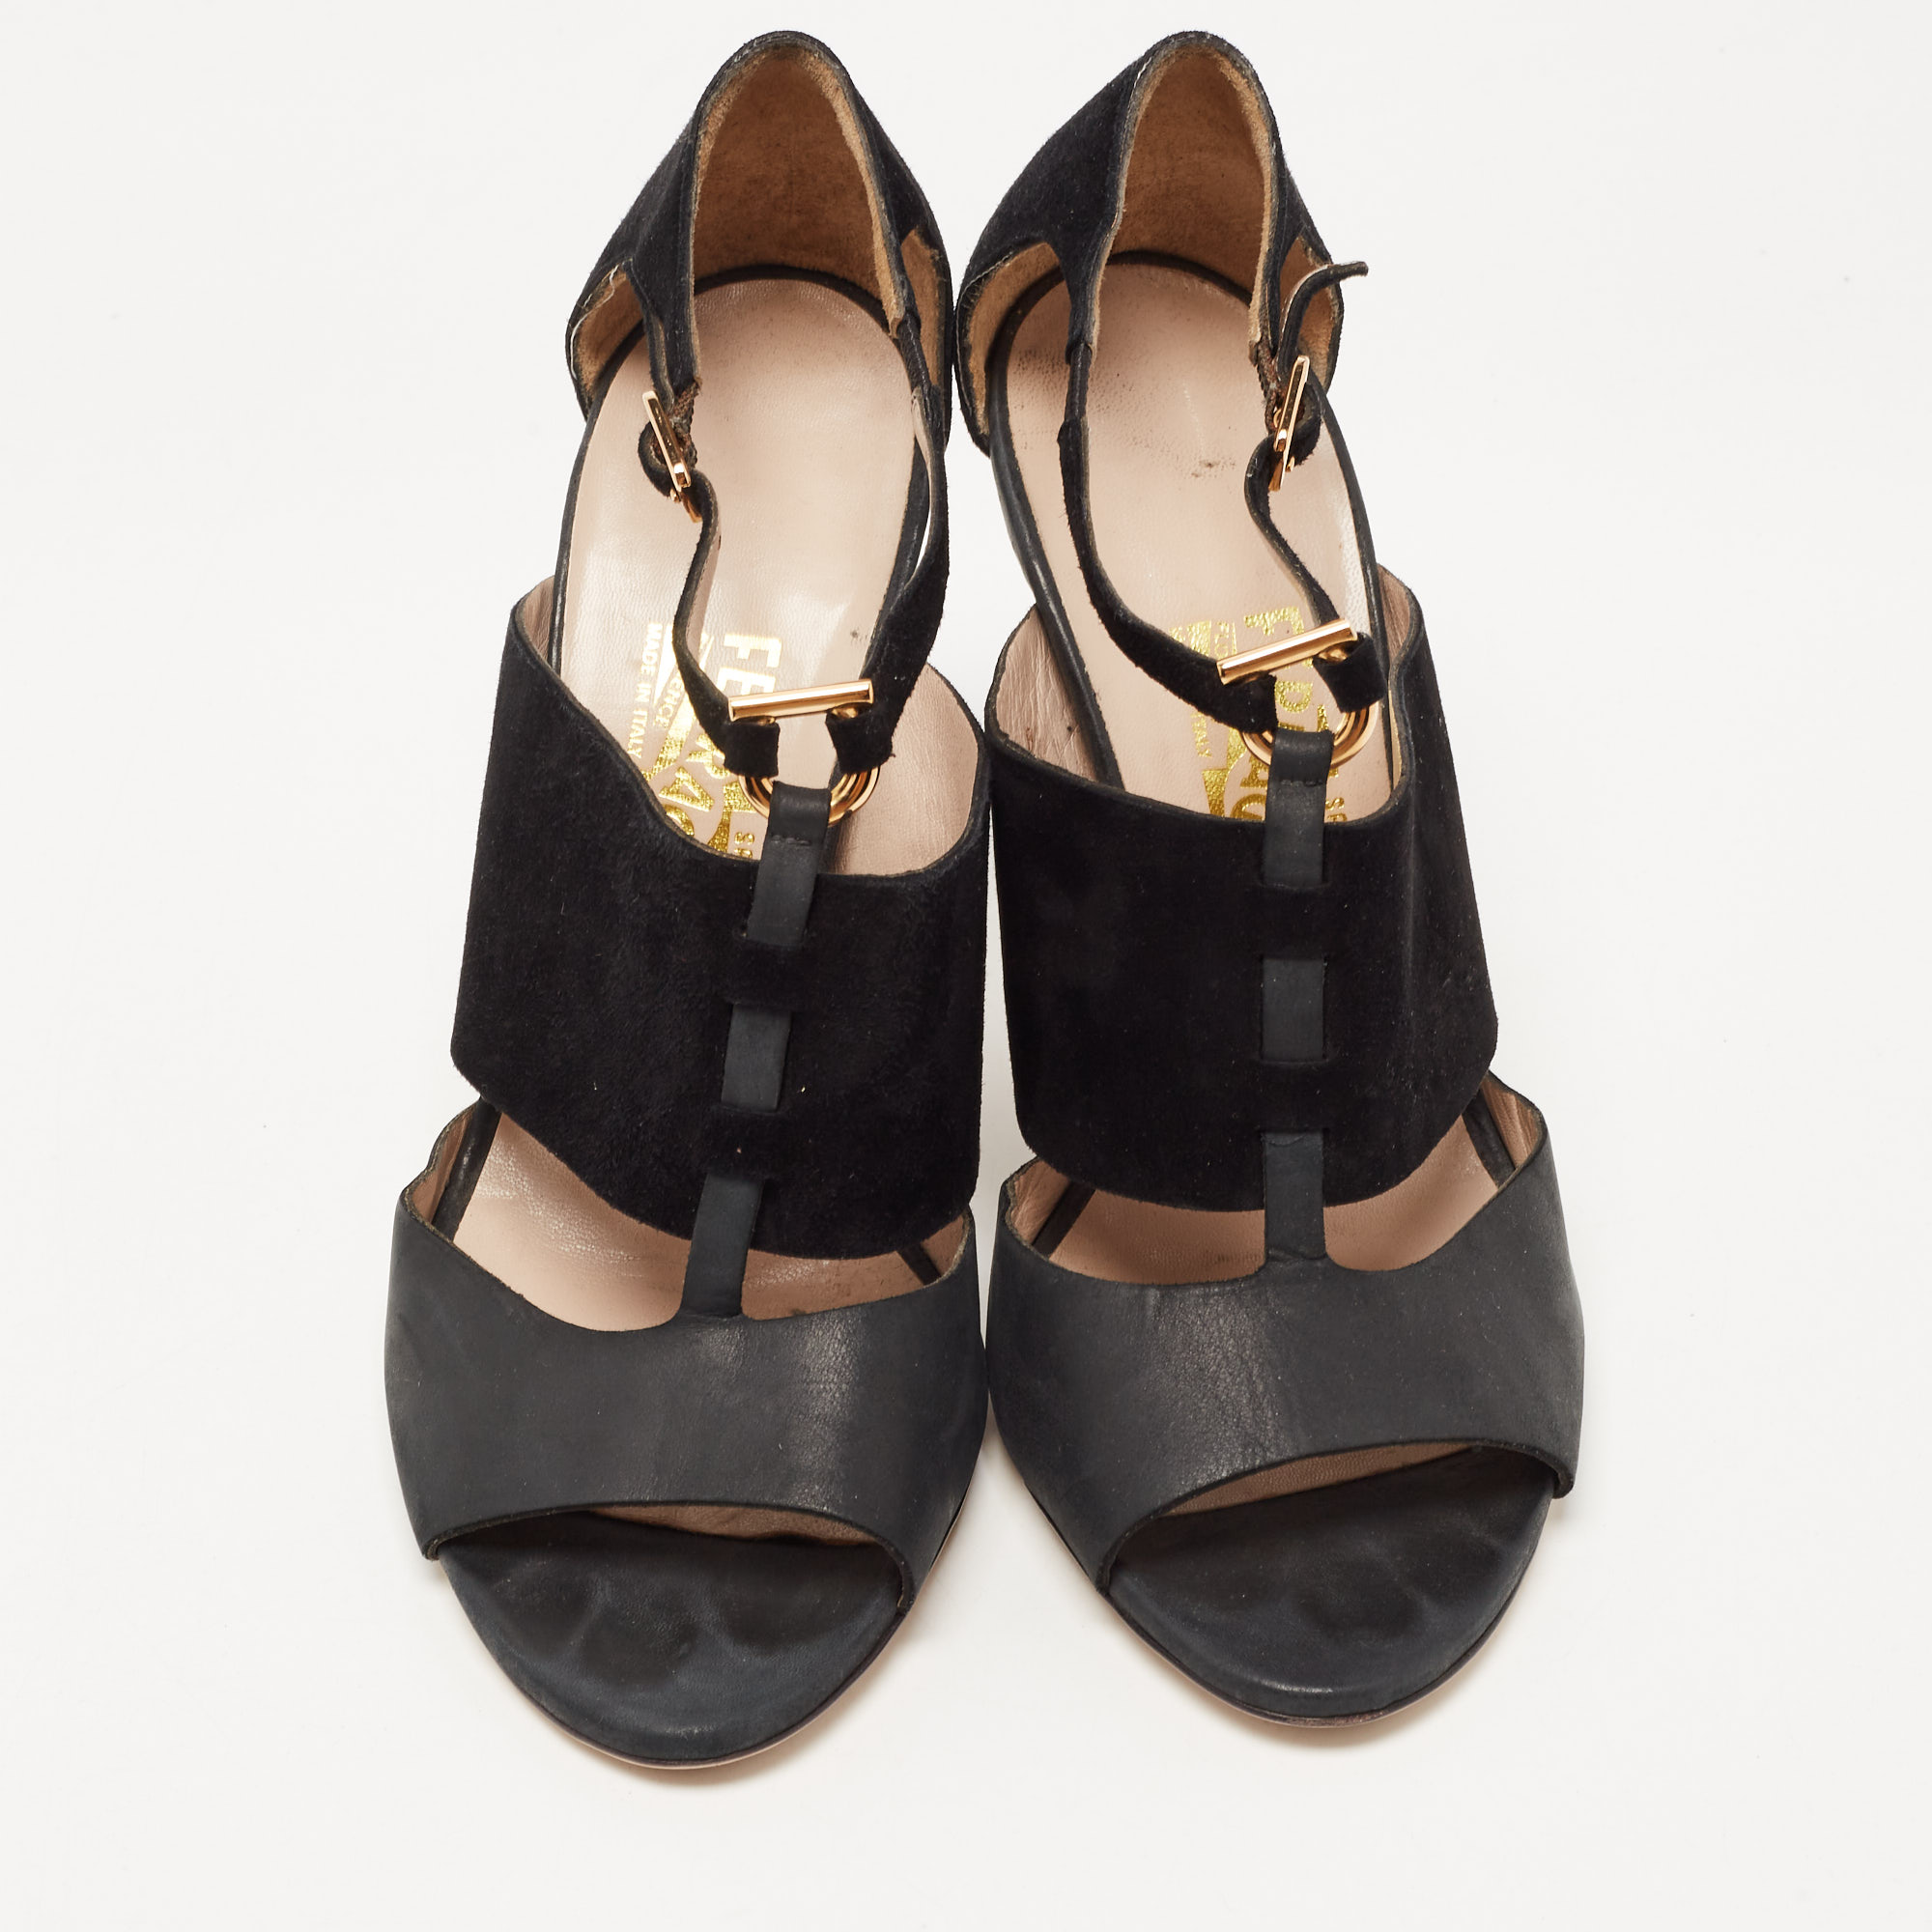 Salvatore Ferragamo Black Leather And Suede T Strap Platform Sandals Size 39.5